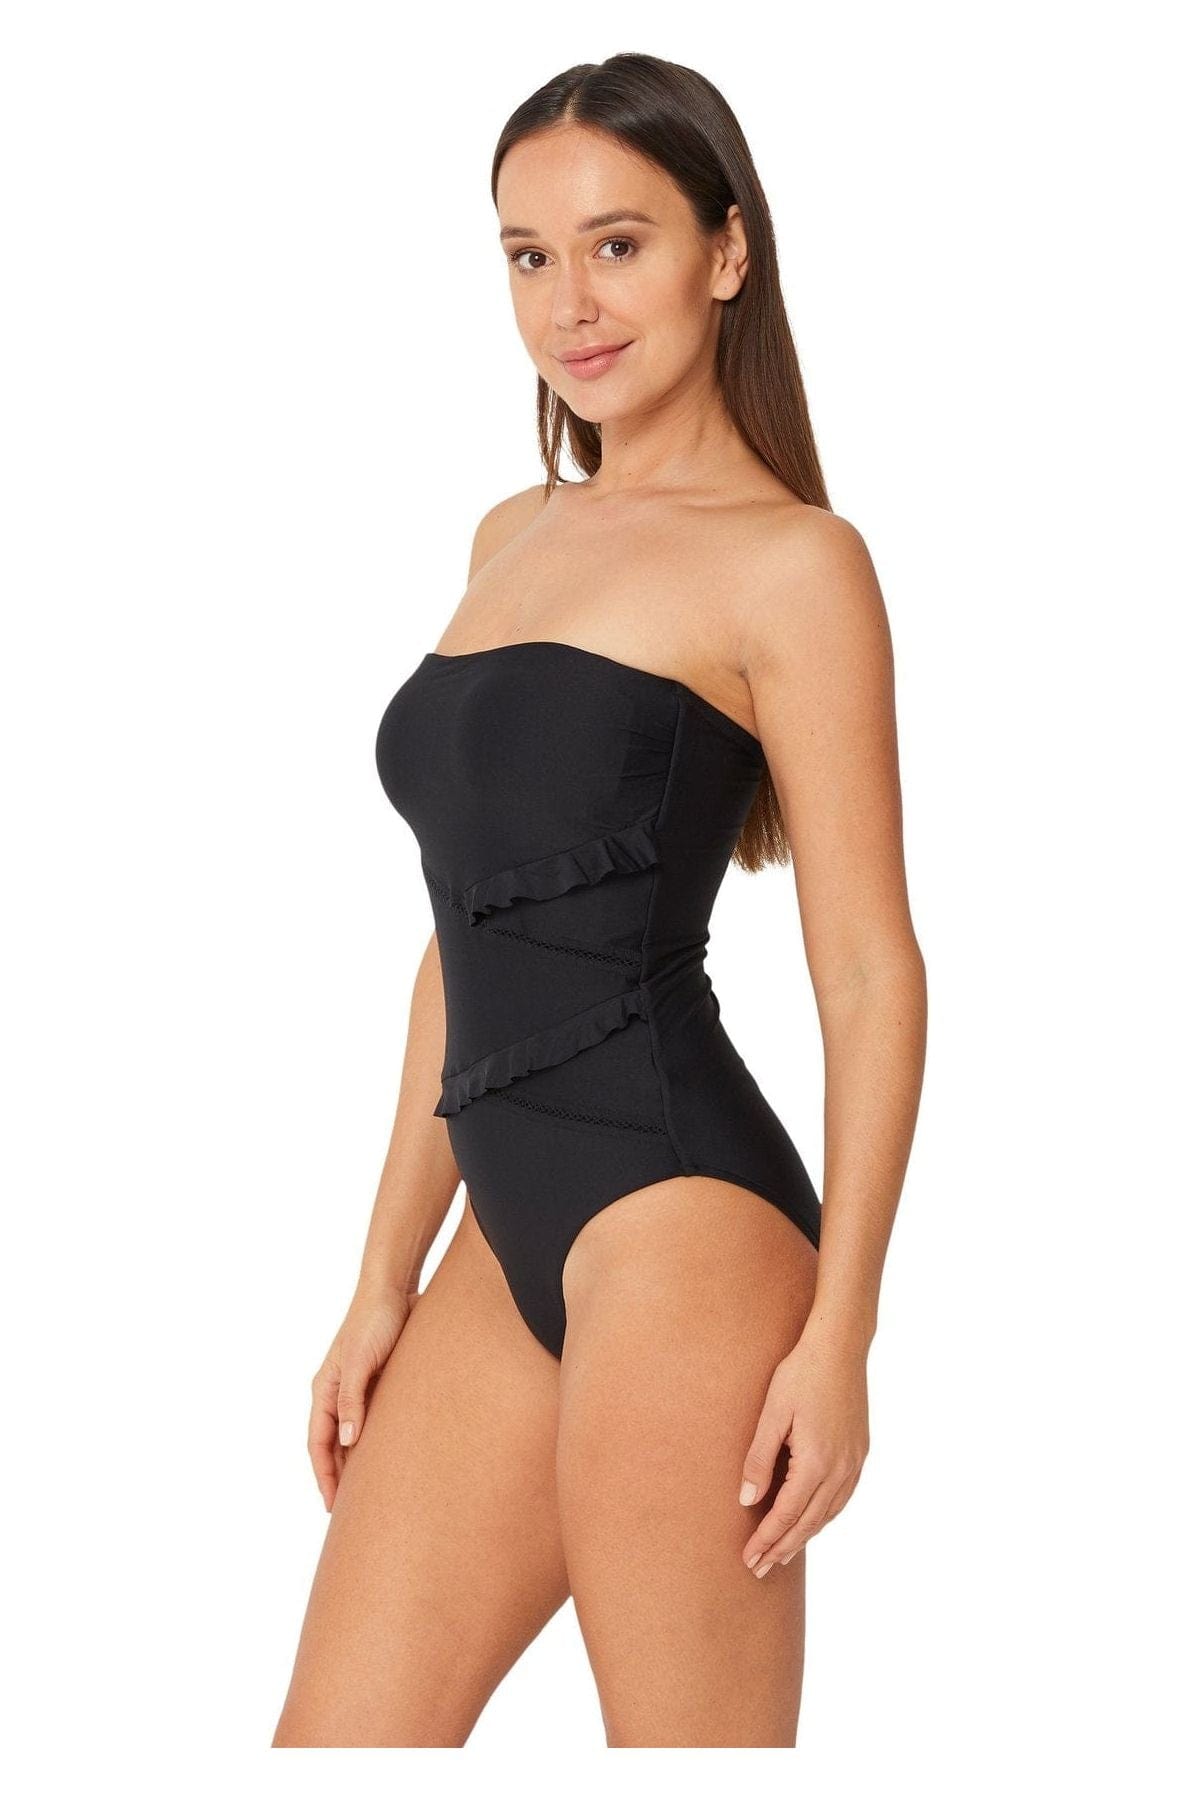 Spliced Bandeau Maillot - Black - Monte & Lou - Splash Swimwear  - Monte & Lou, One Pieces, Womens - Splash Swimwear 